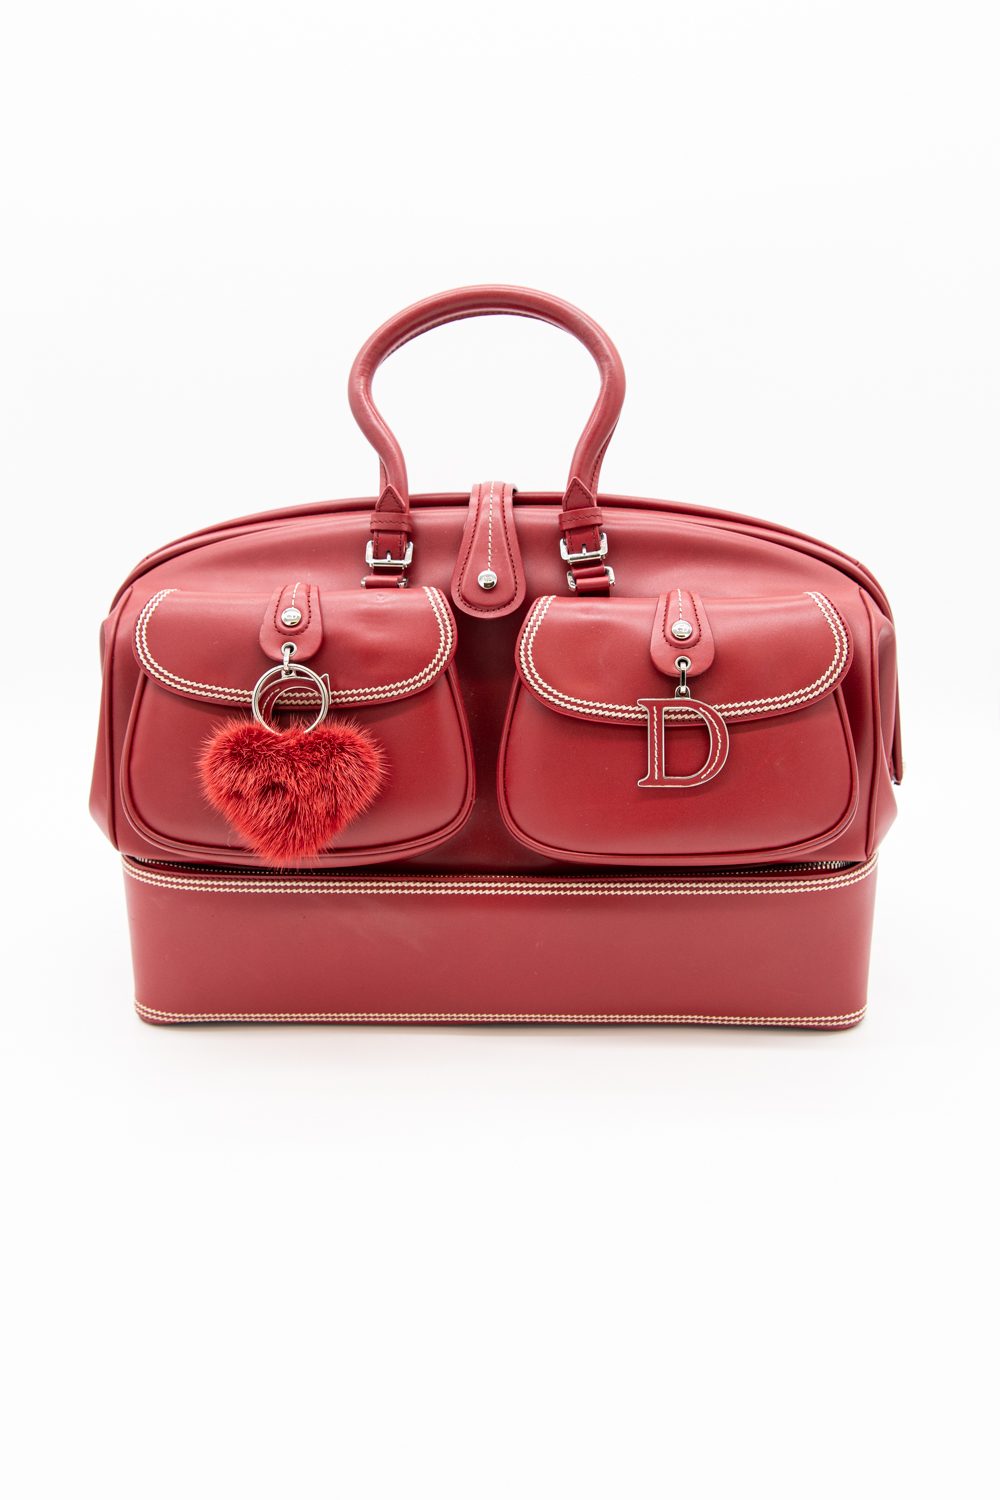 Dior Vintage "Detective Bag" Reisetasche in Rot